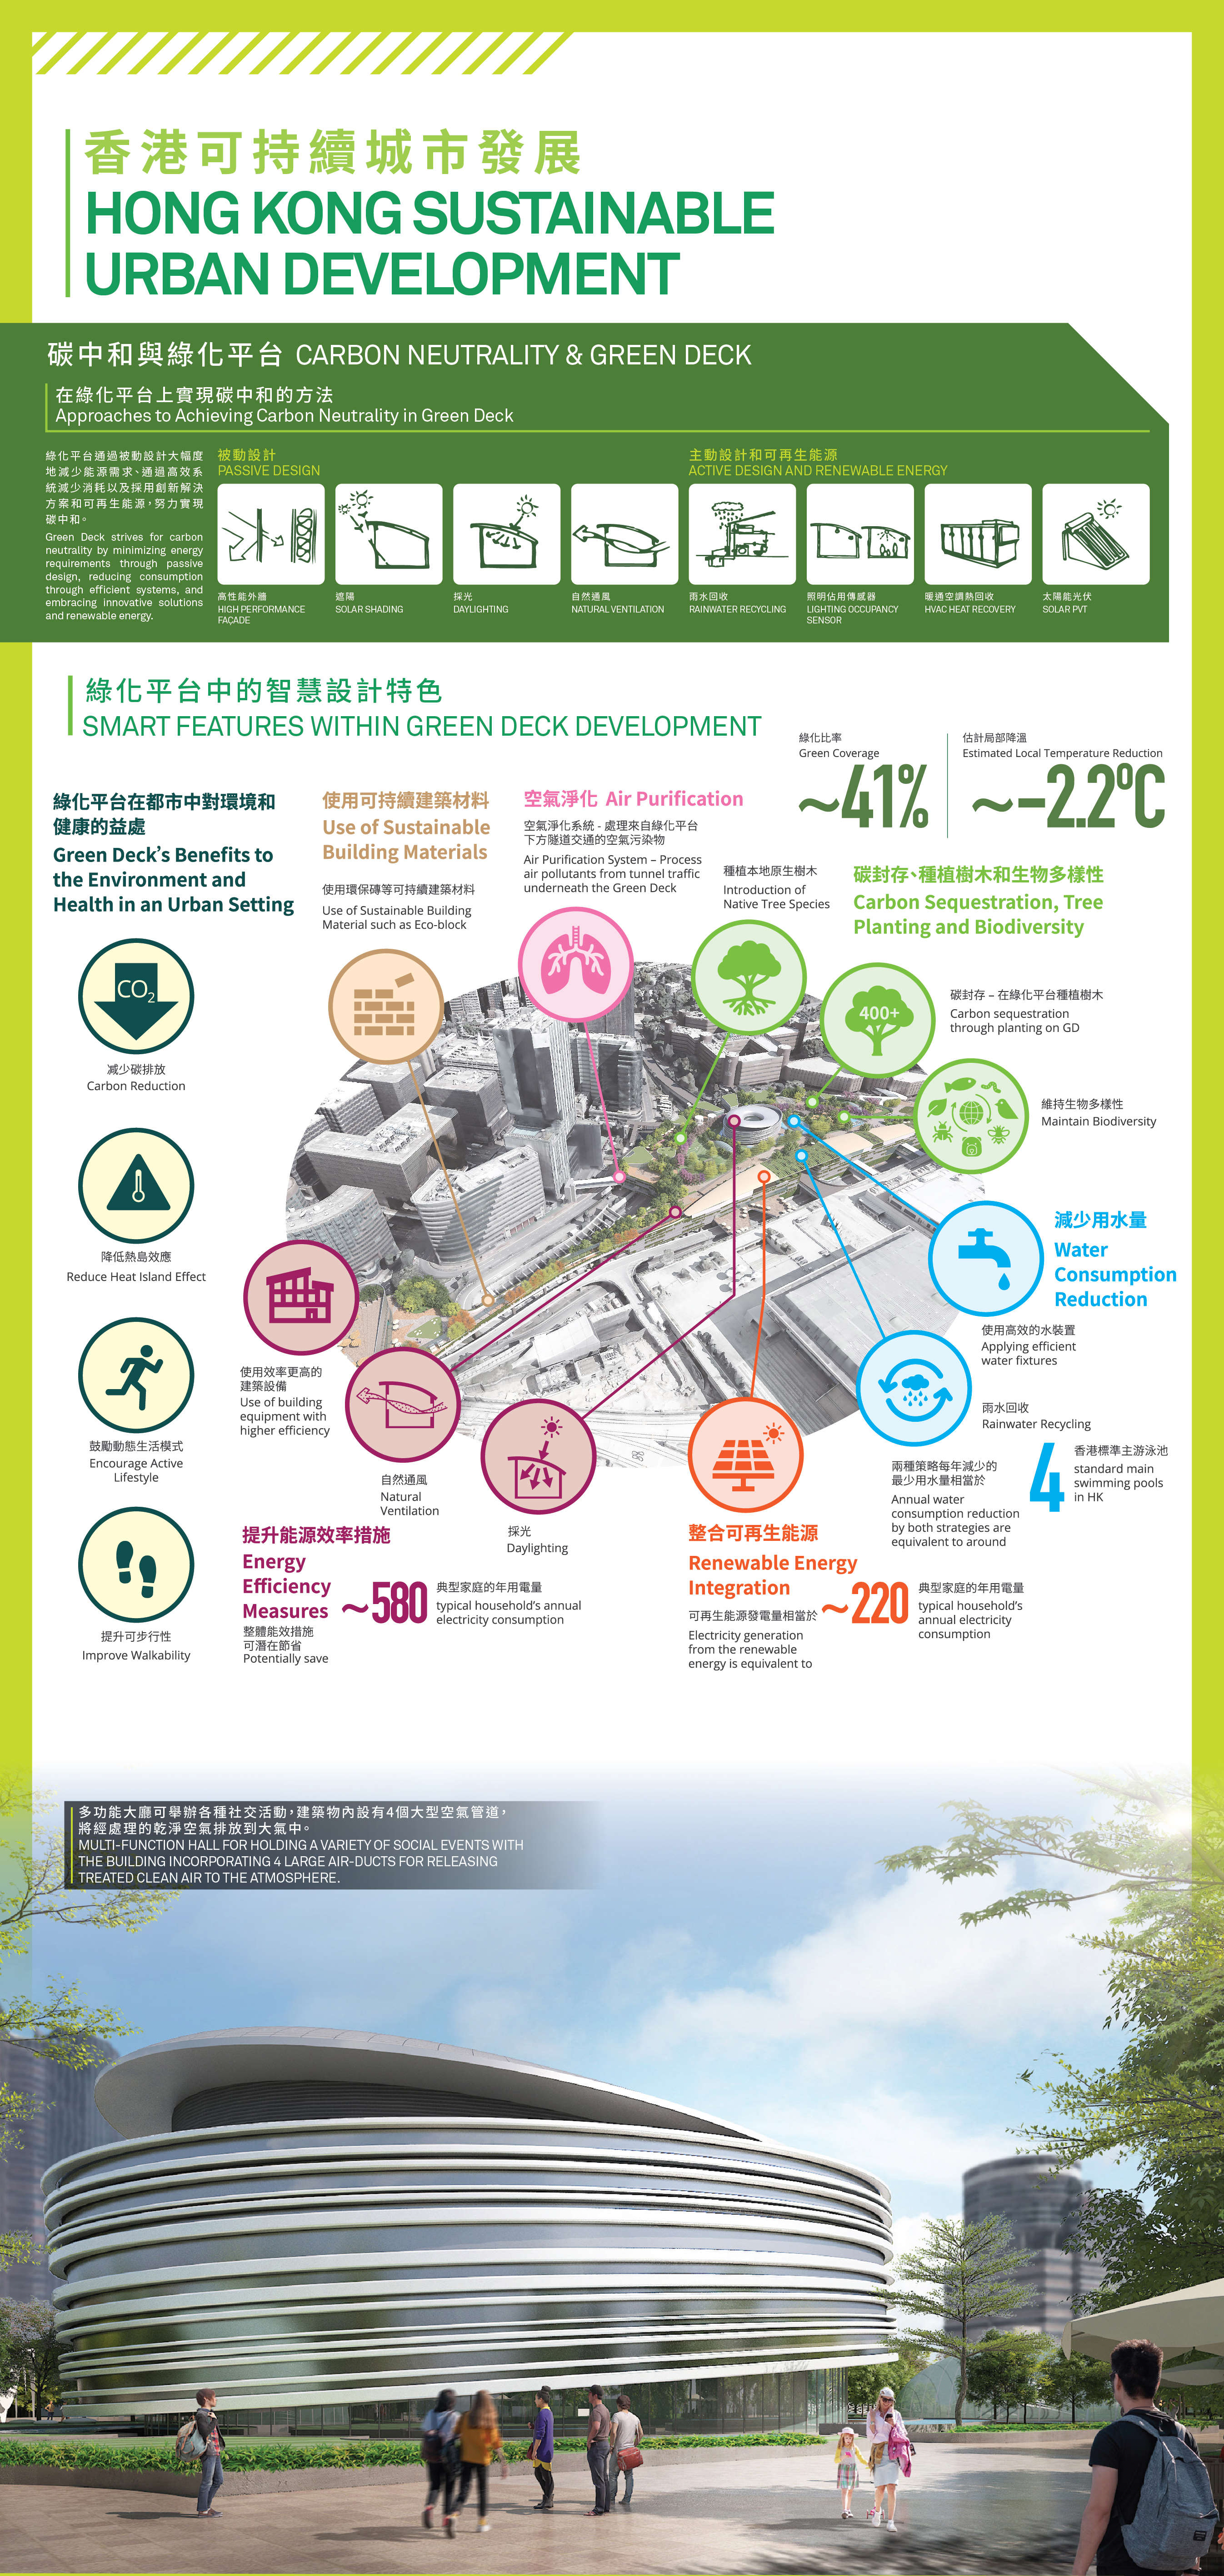 5. Hong Kong sustainable urban development